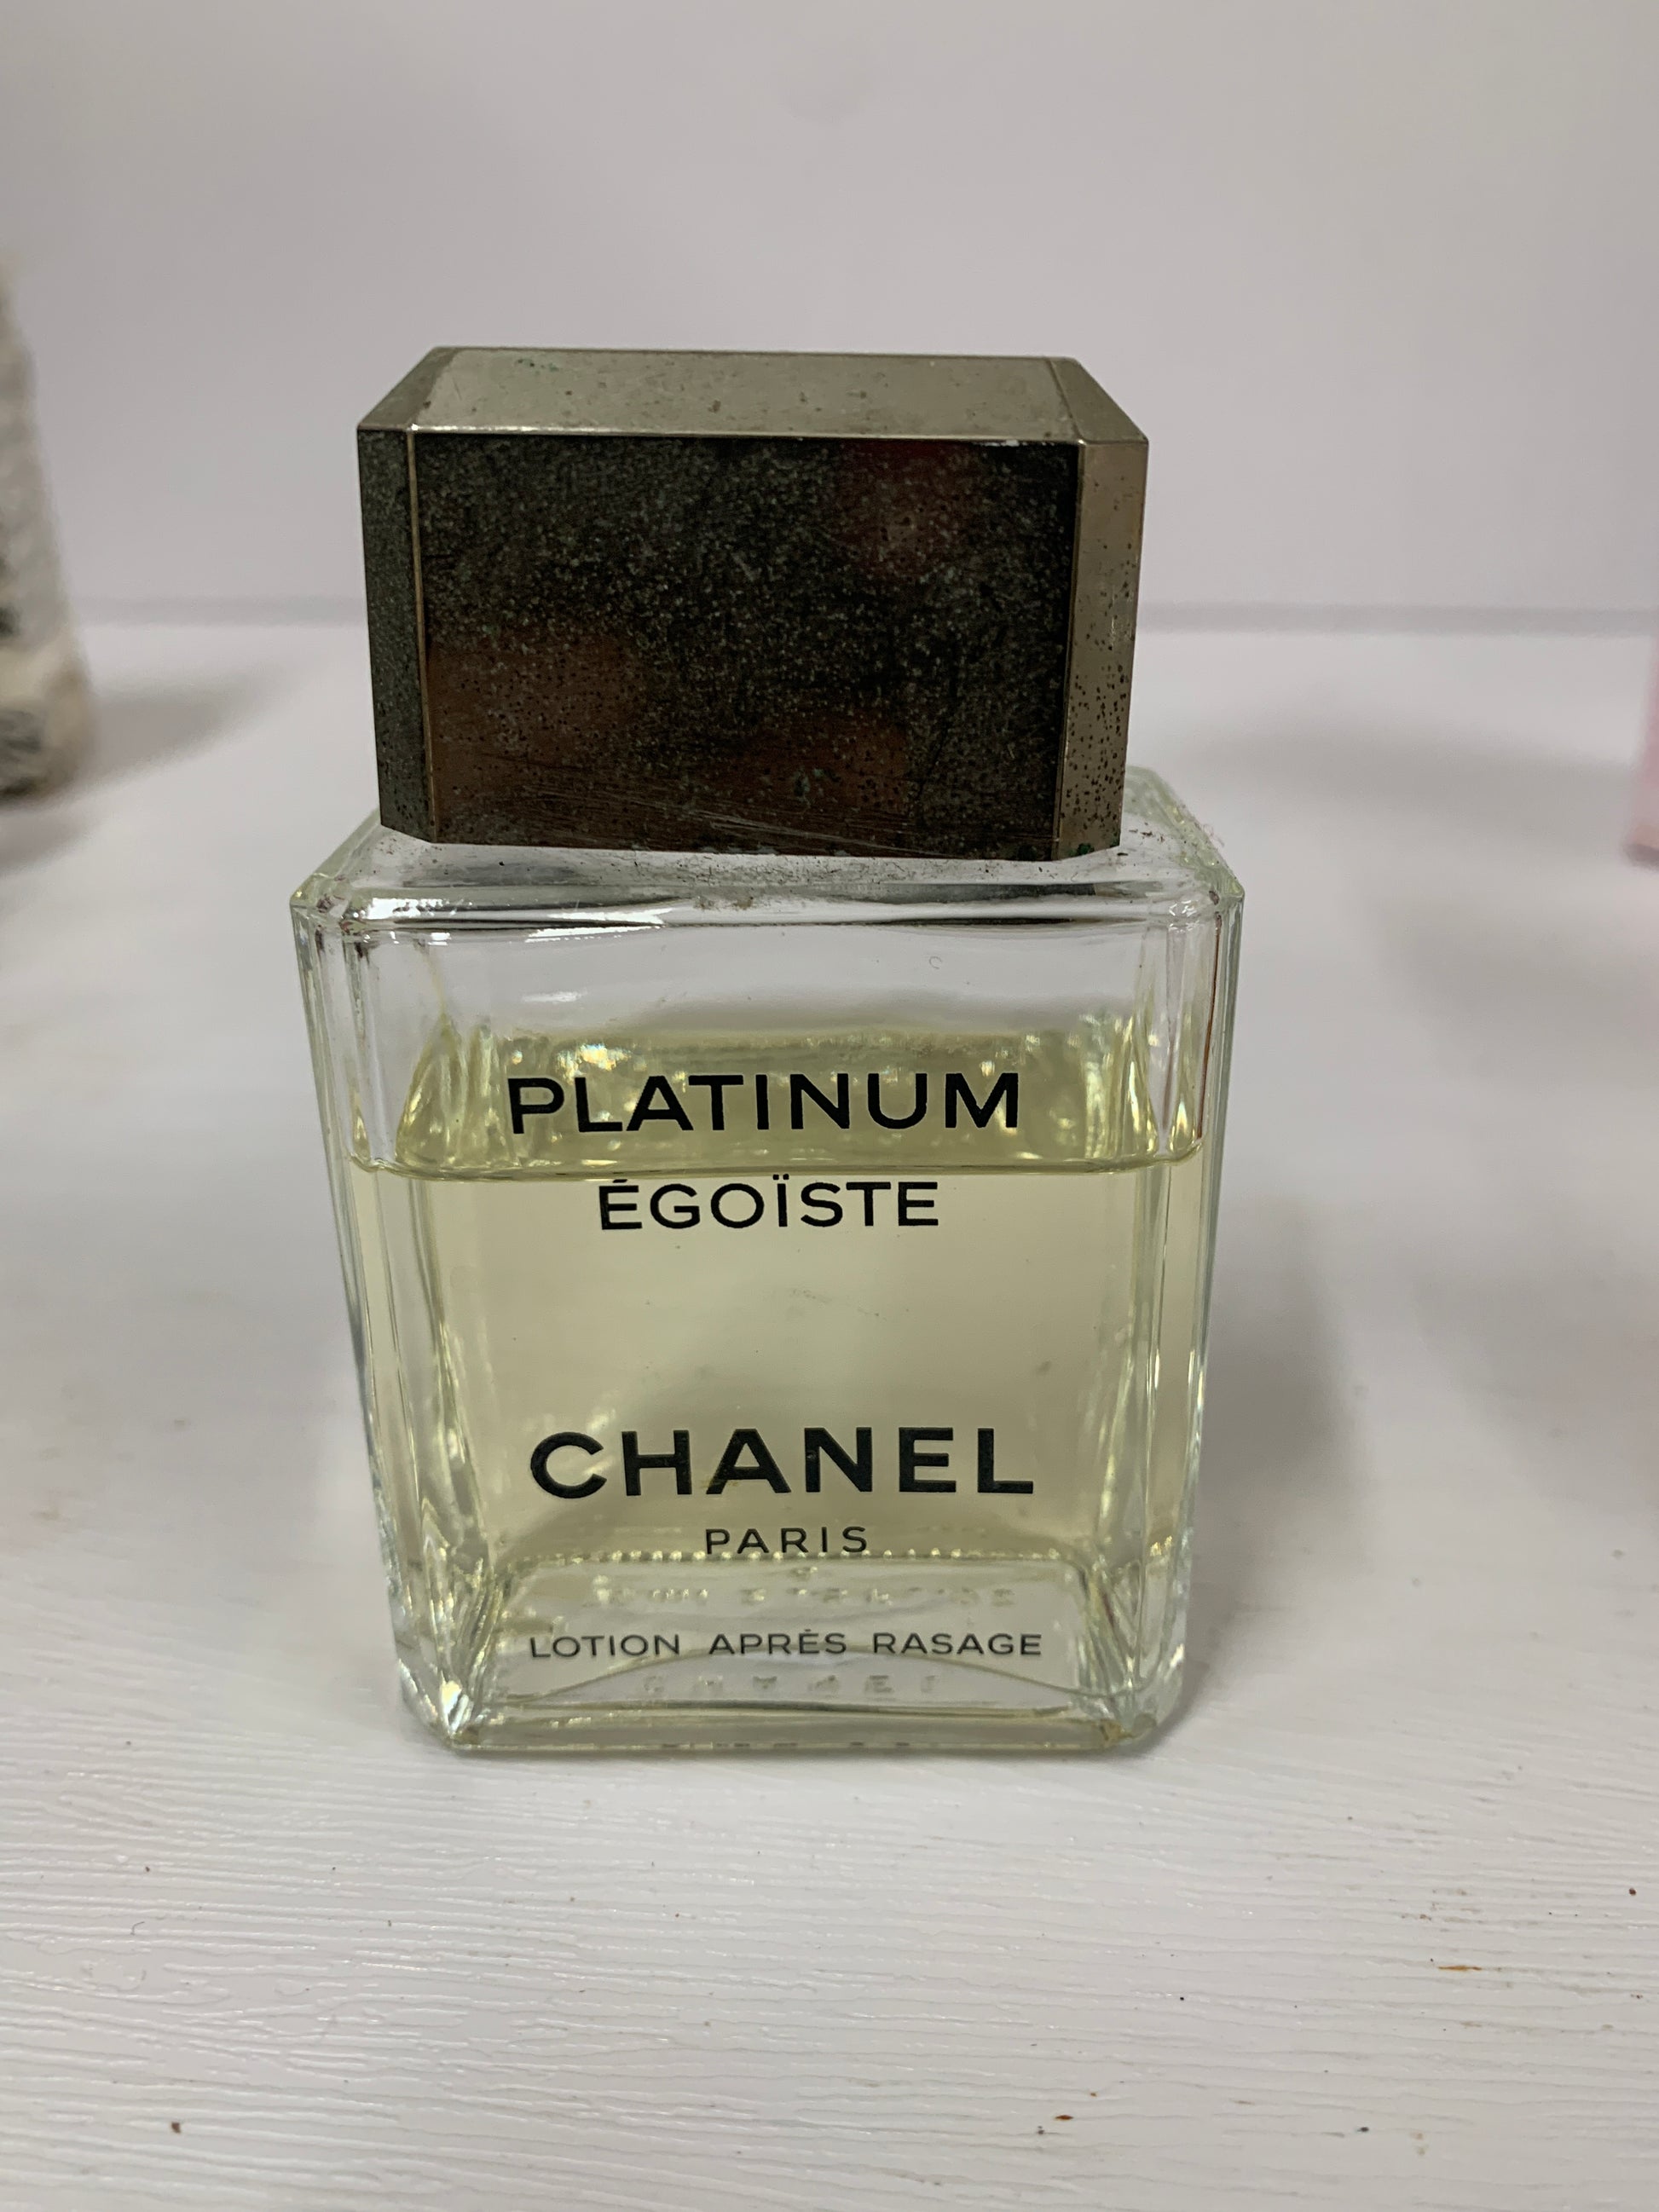 Chanel Platinum egoiste Lotion apres rasage 75ml 2.5 oz - OCT21